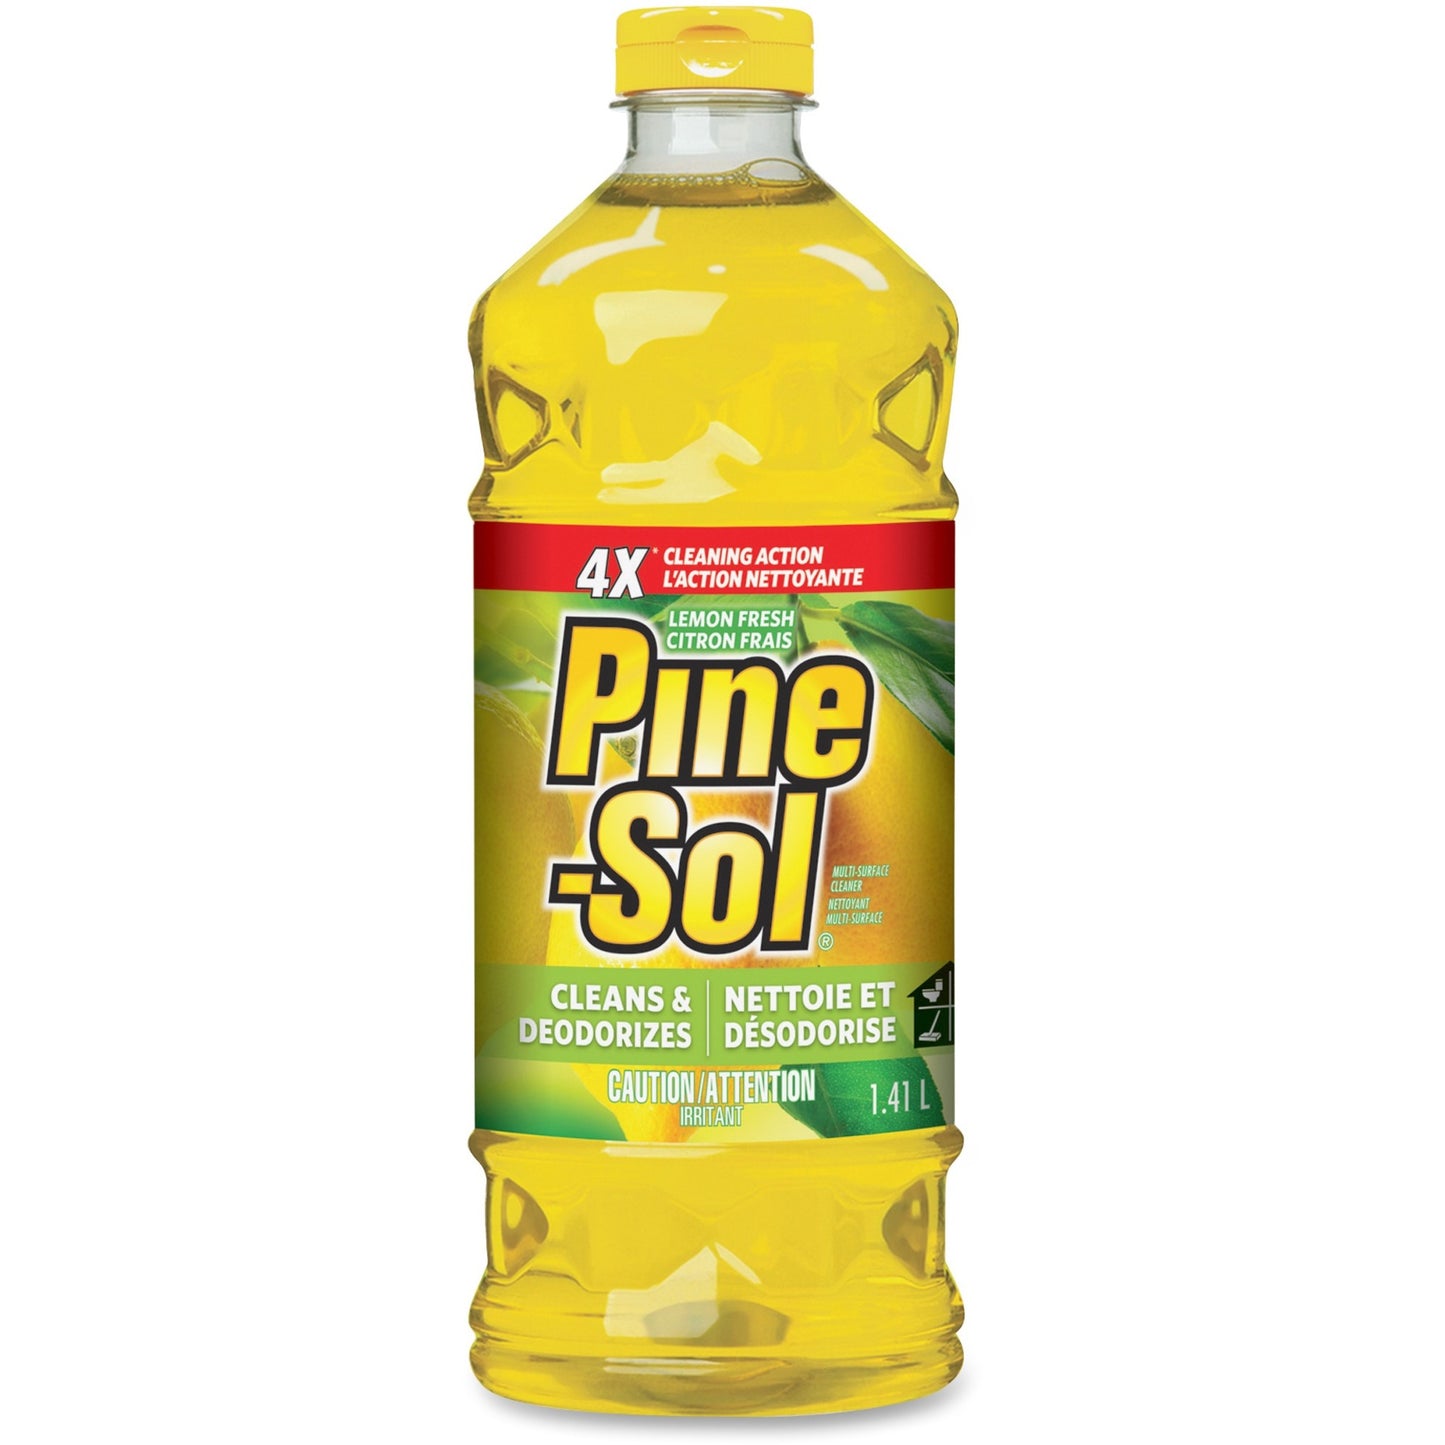 Pine-Sol Lemon Fresh